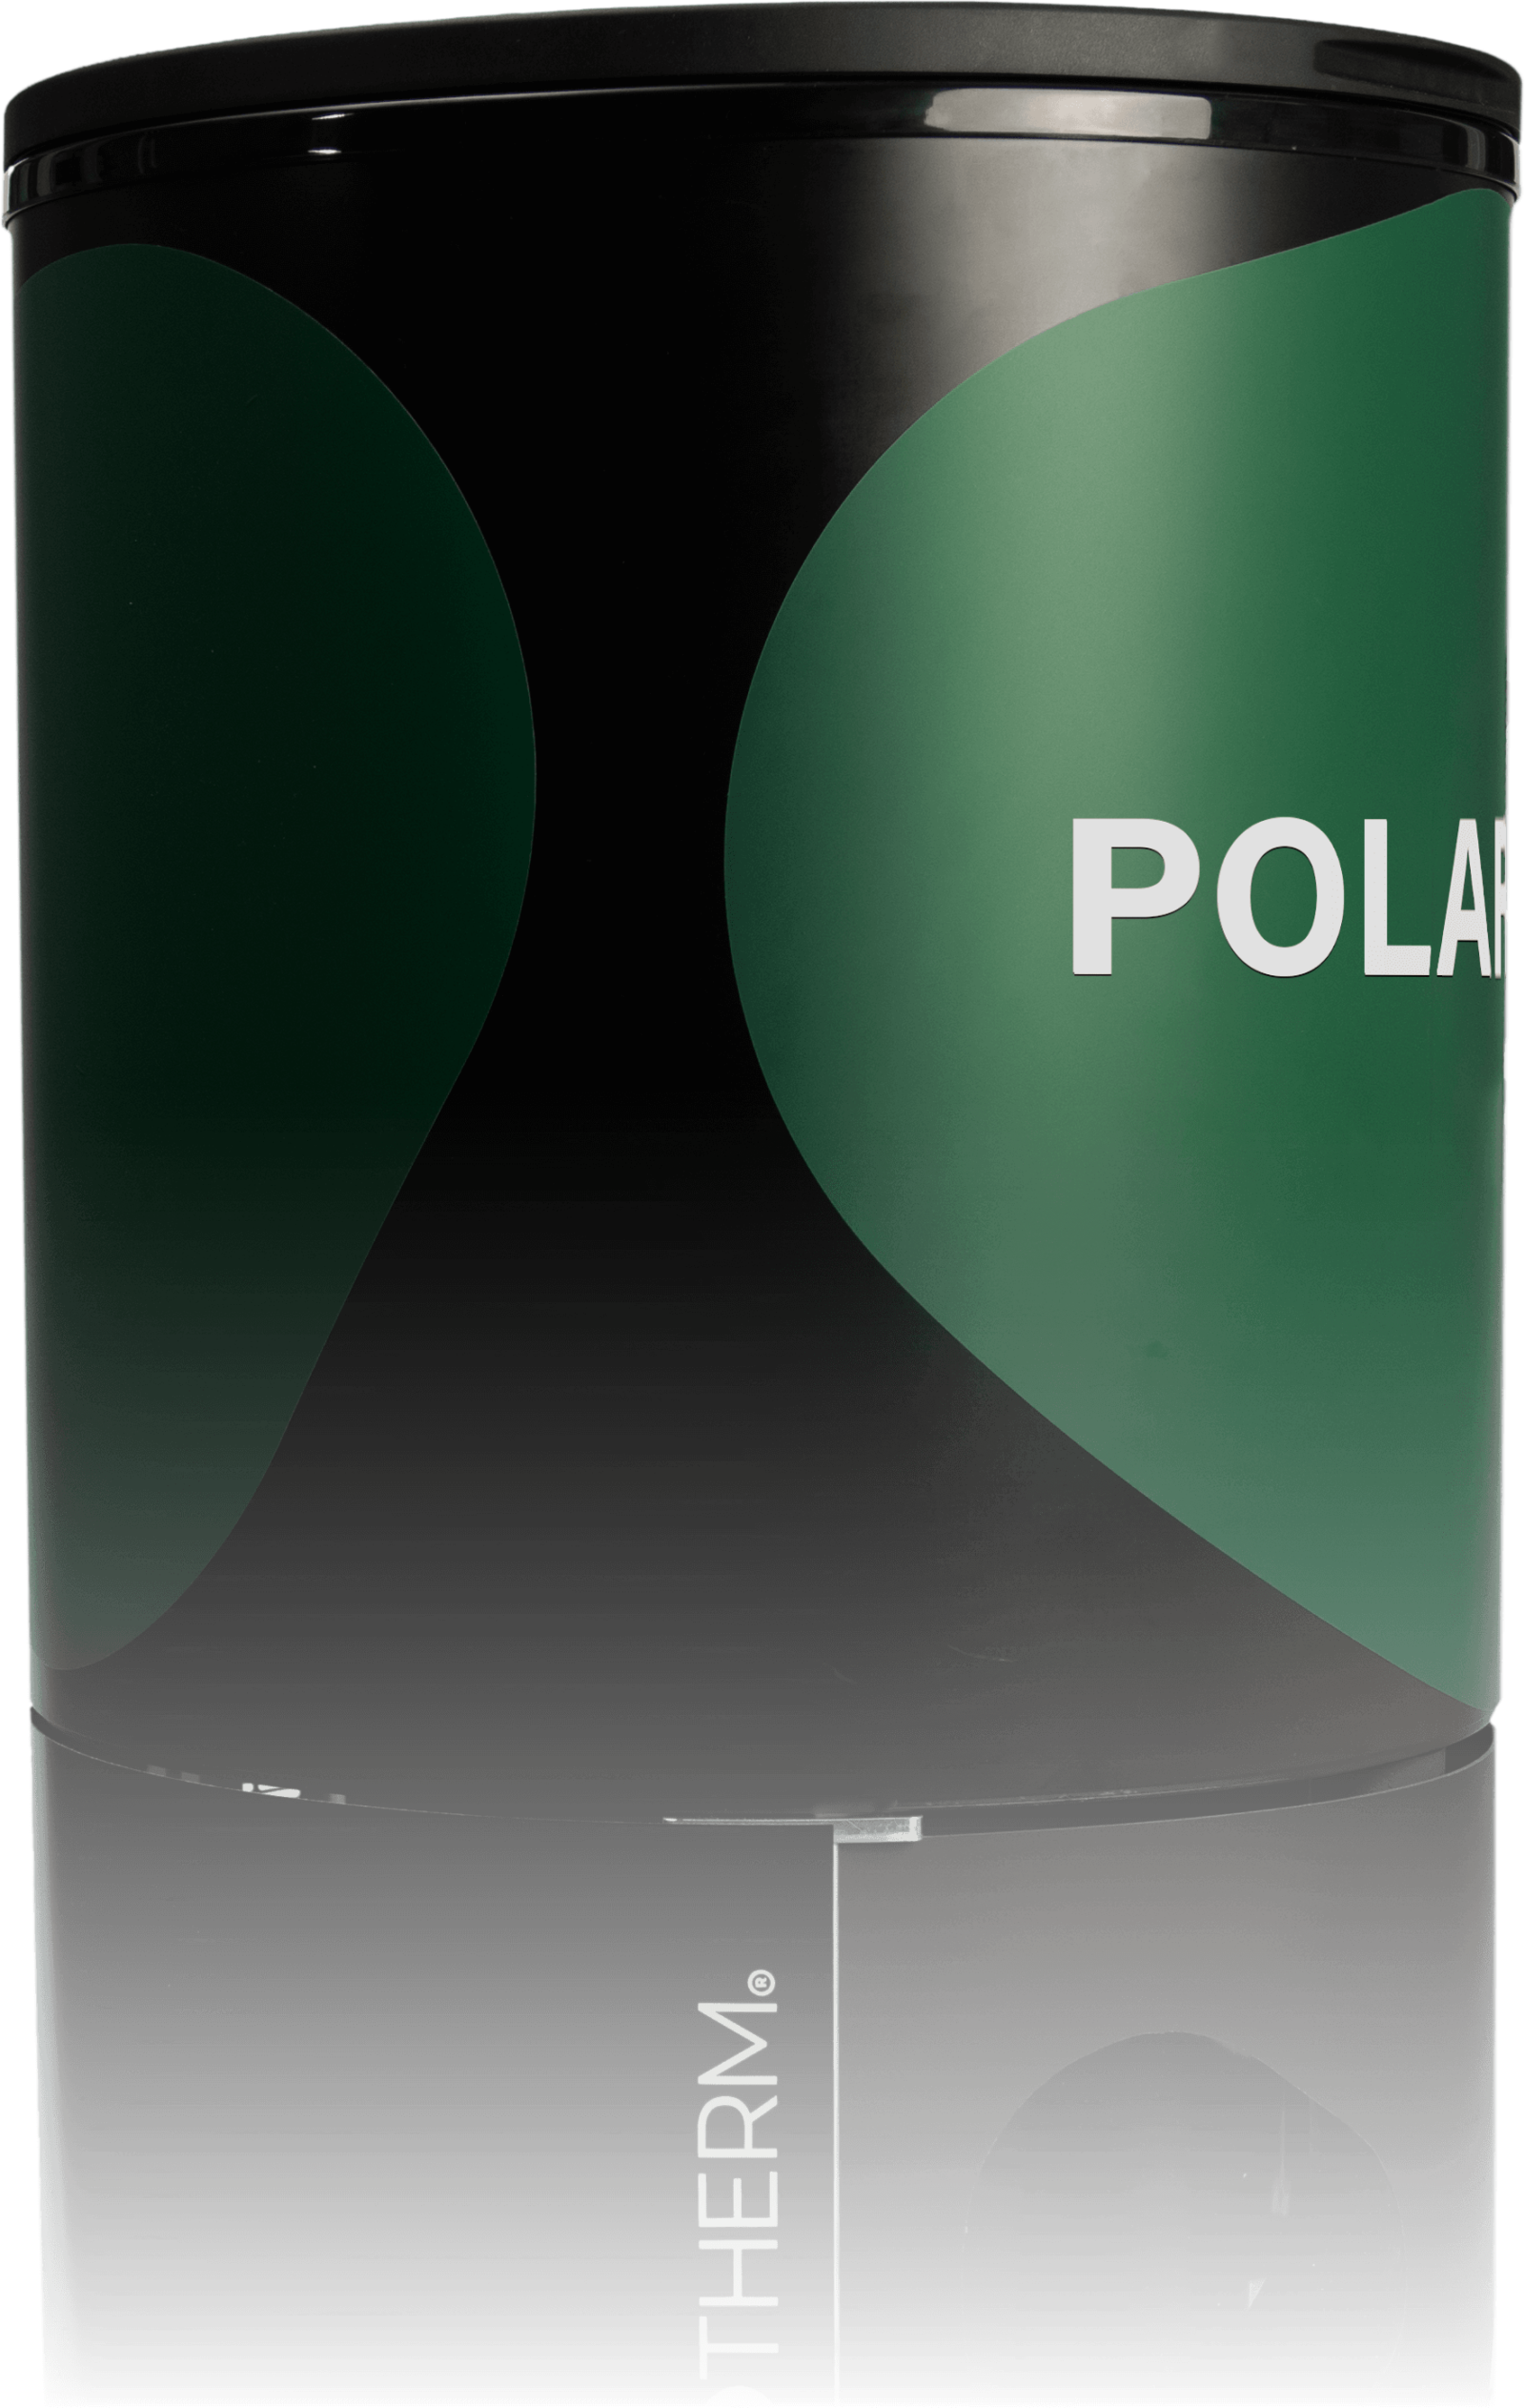 POLARIS – The magnetic beverage cooler